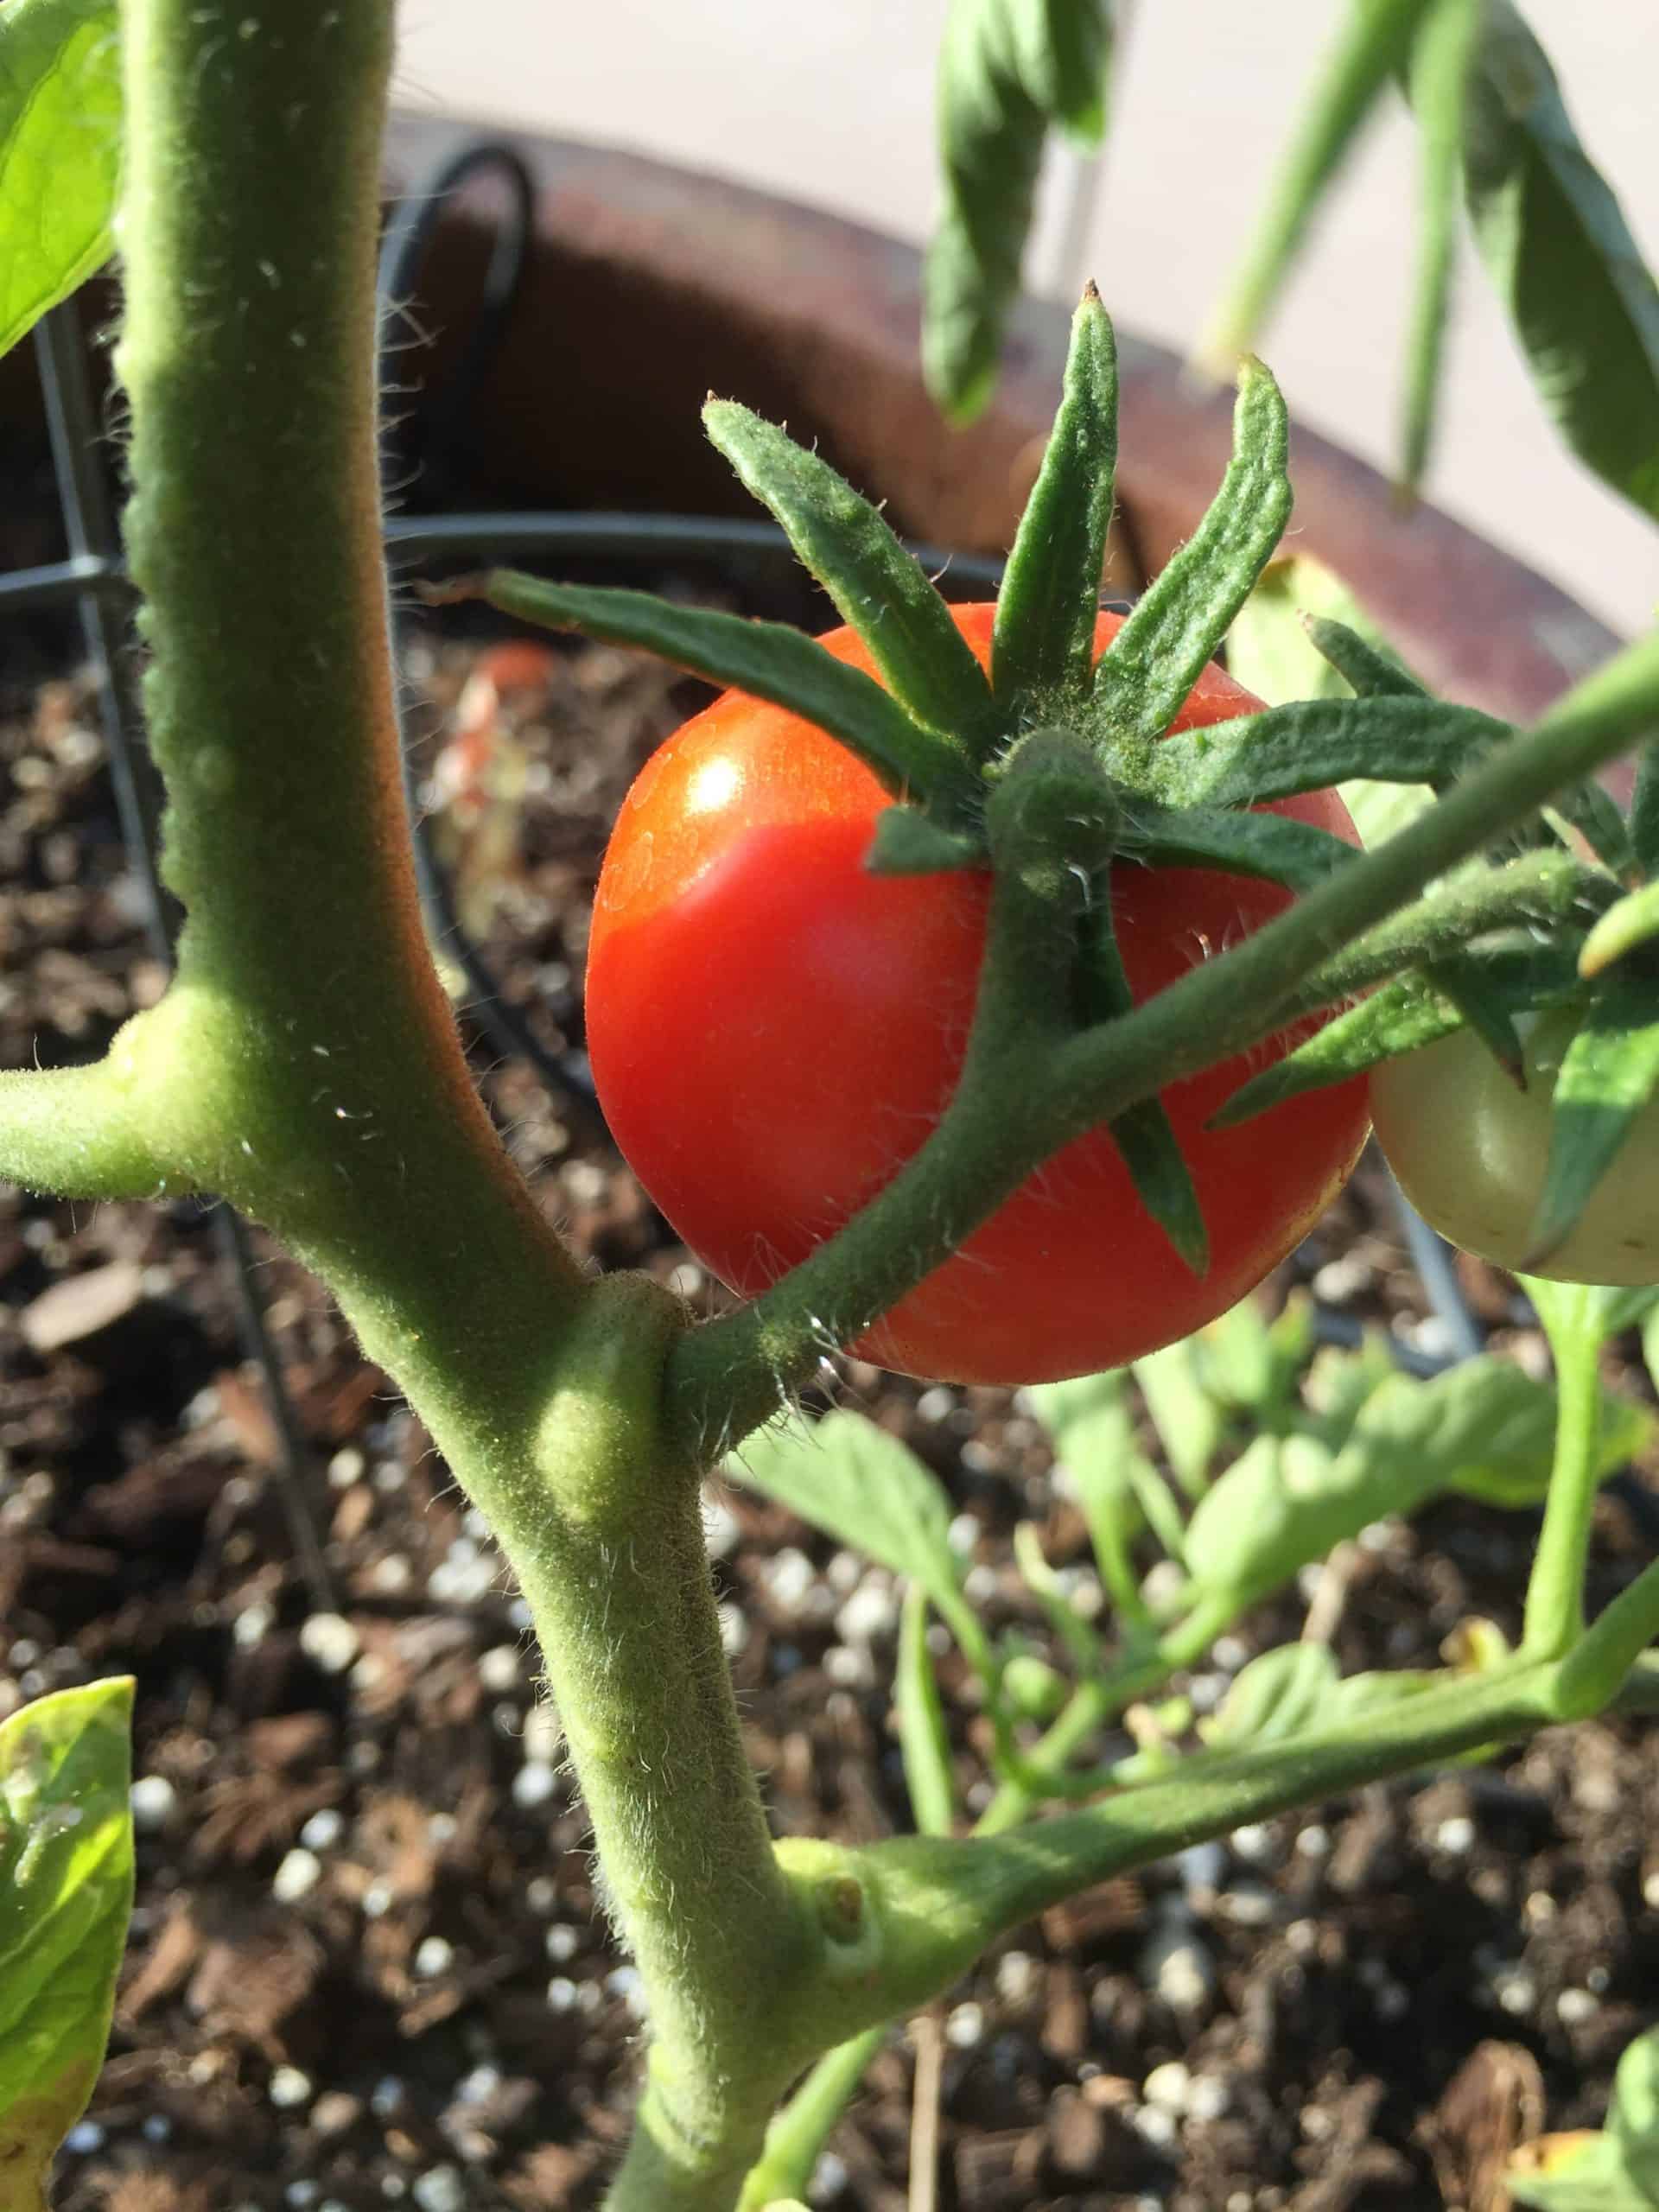 indeterminate tomatoes